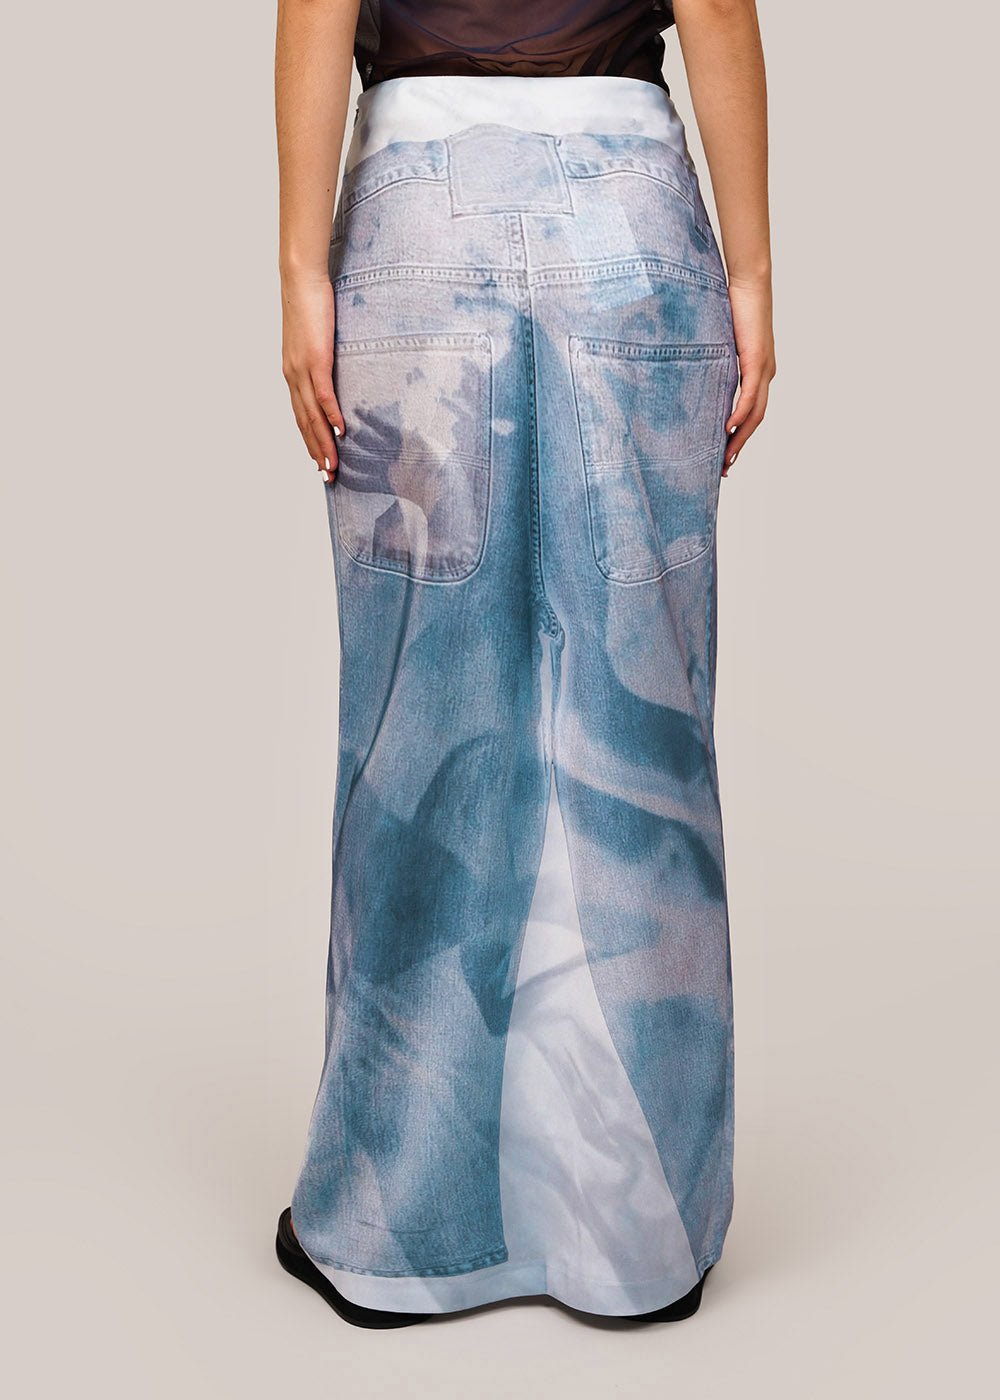 Handy Jean Print Silky Ankle Skirt in Blue by ELLISS – New